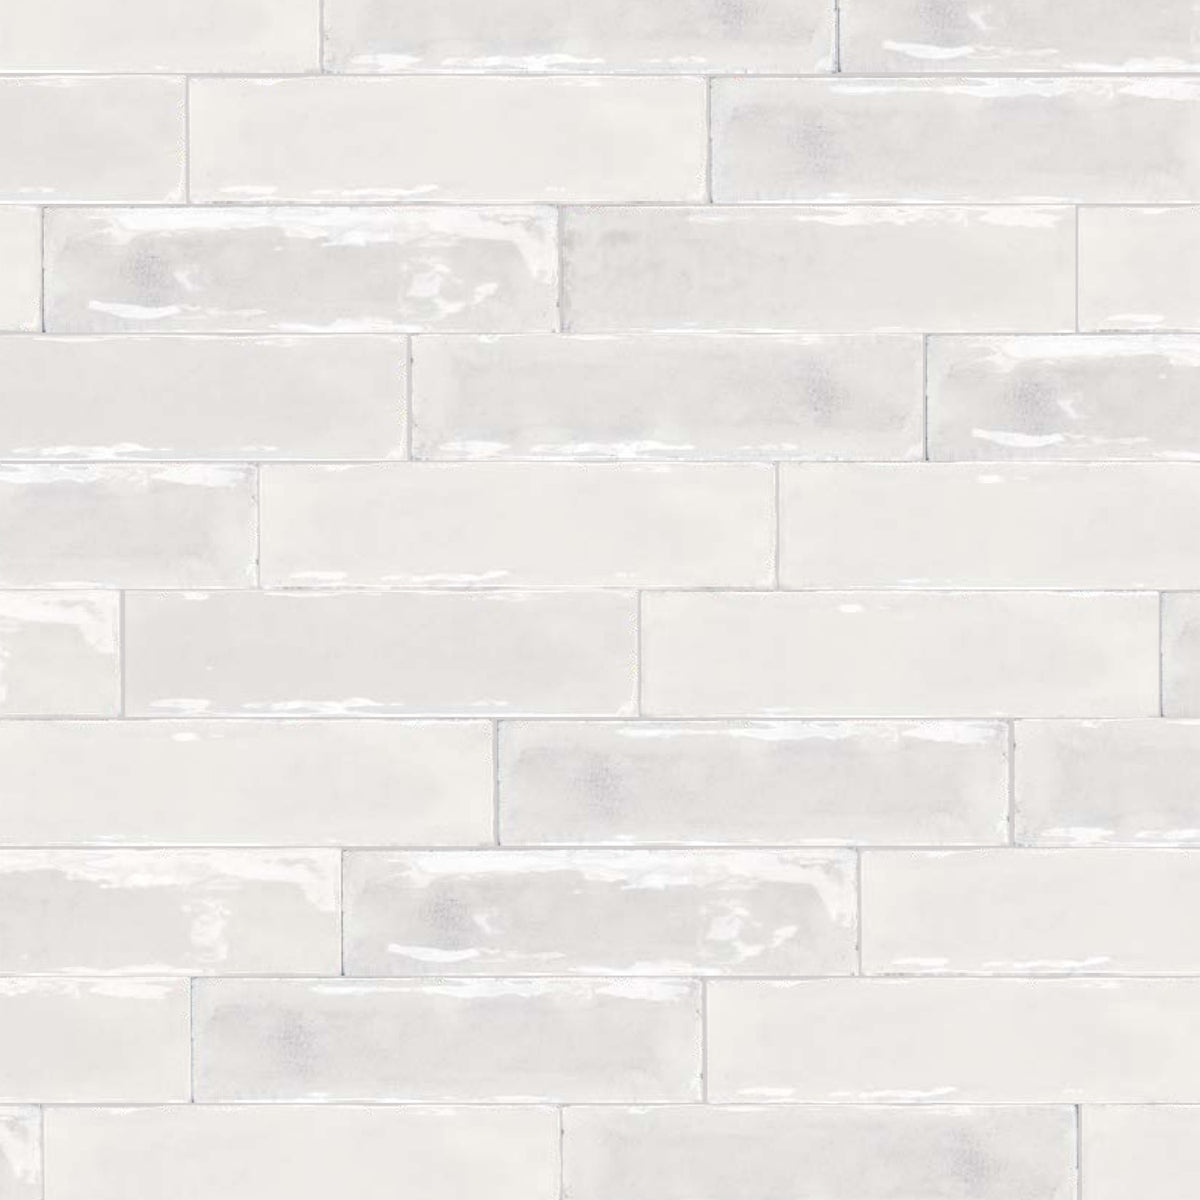 Topcu - Ondine 3 in. x 12 in Wall Tile - All White